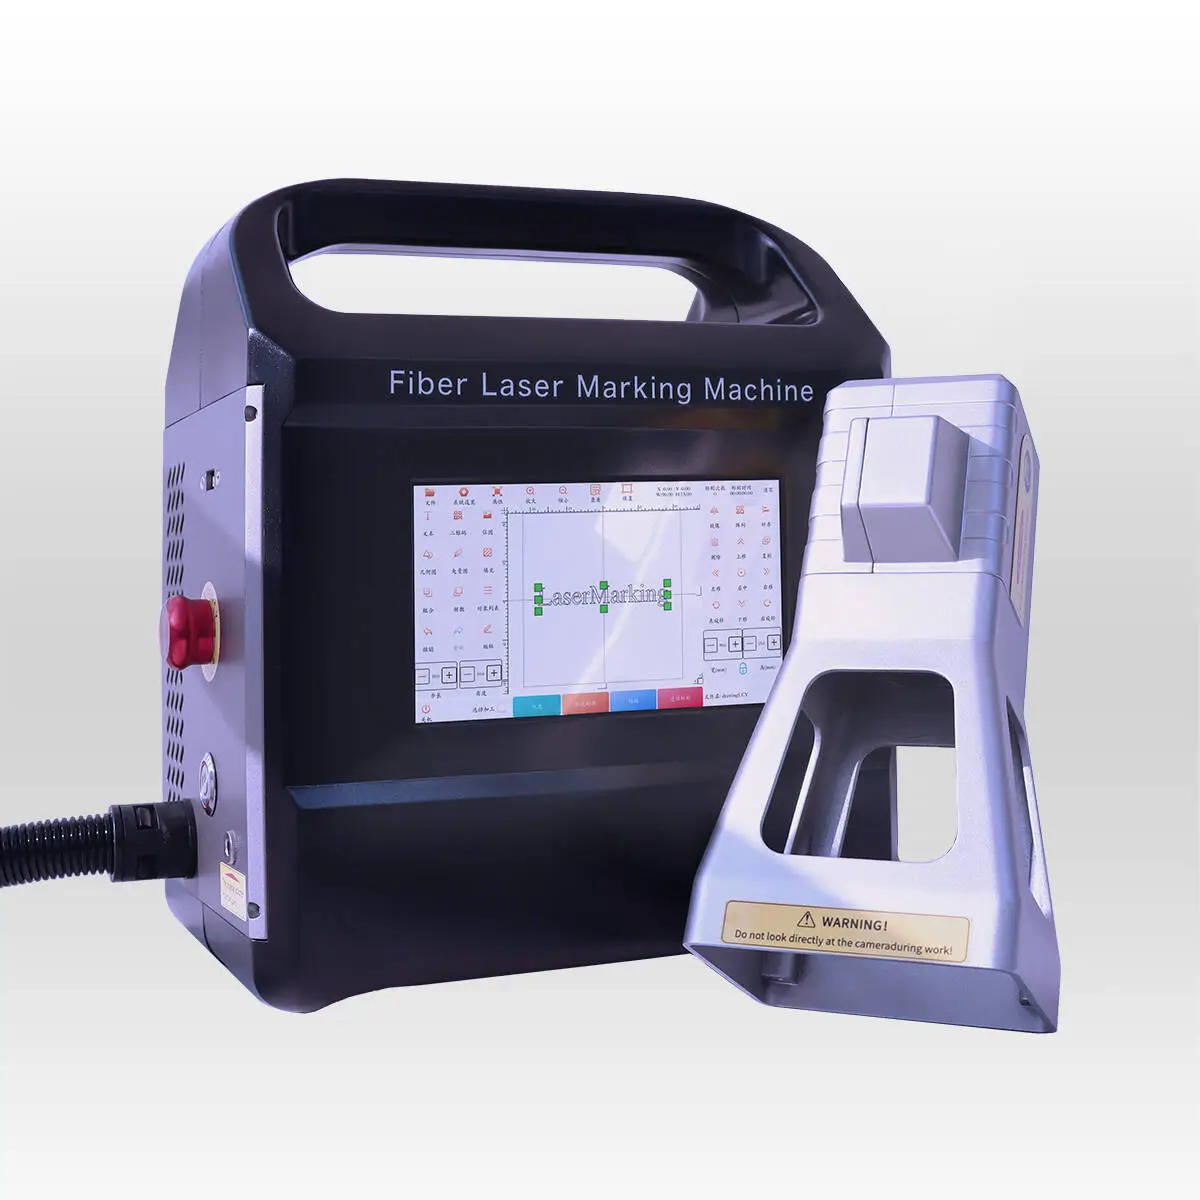 Eletric portable fiber laser marking machine for hard plastic